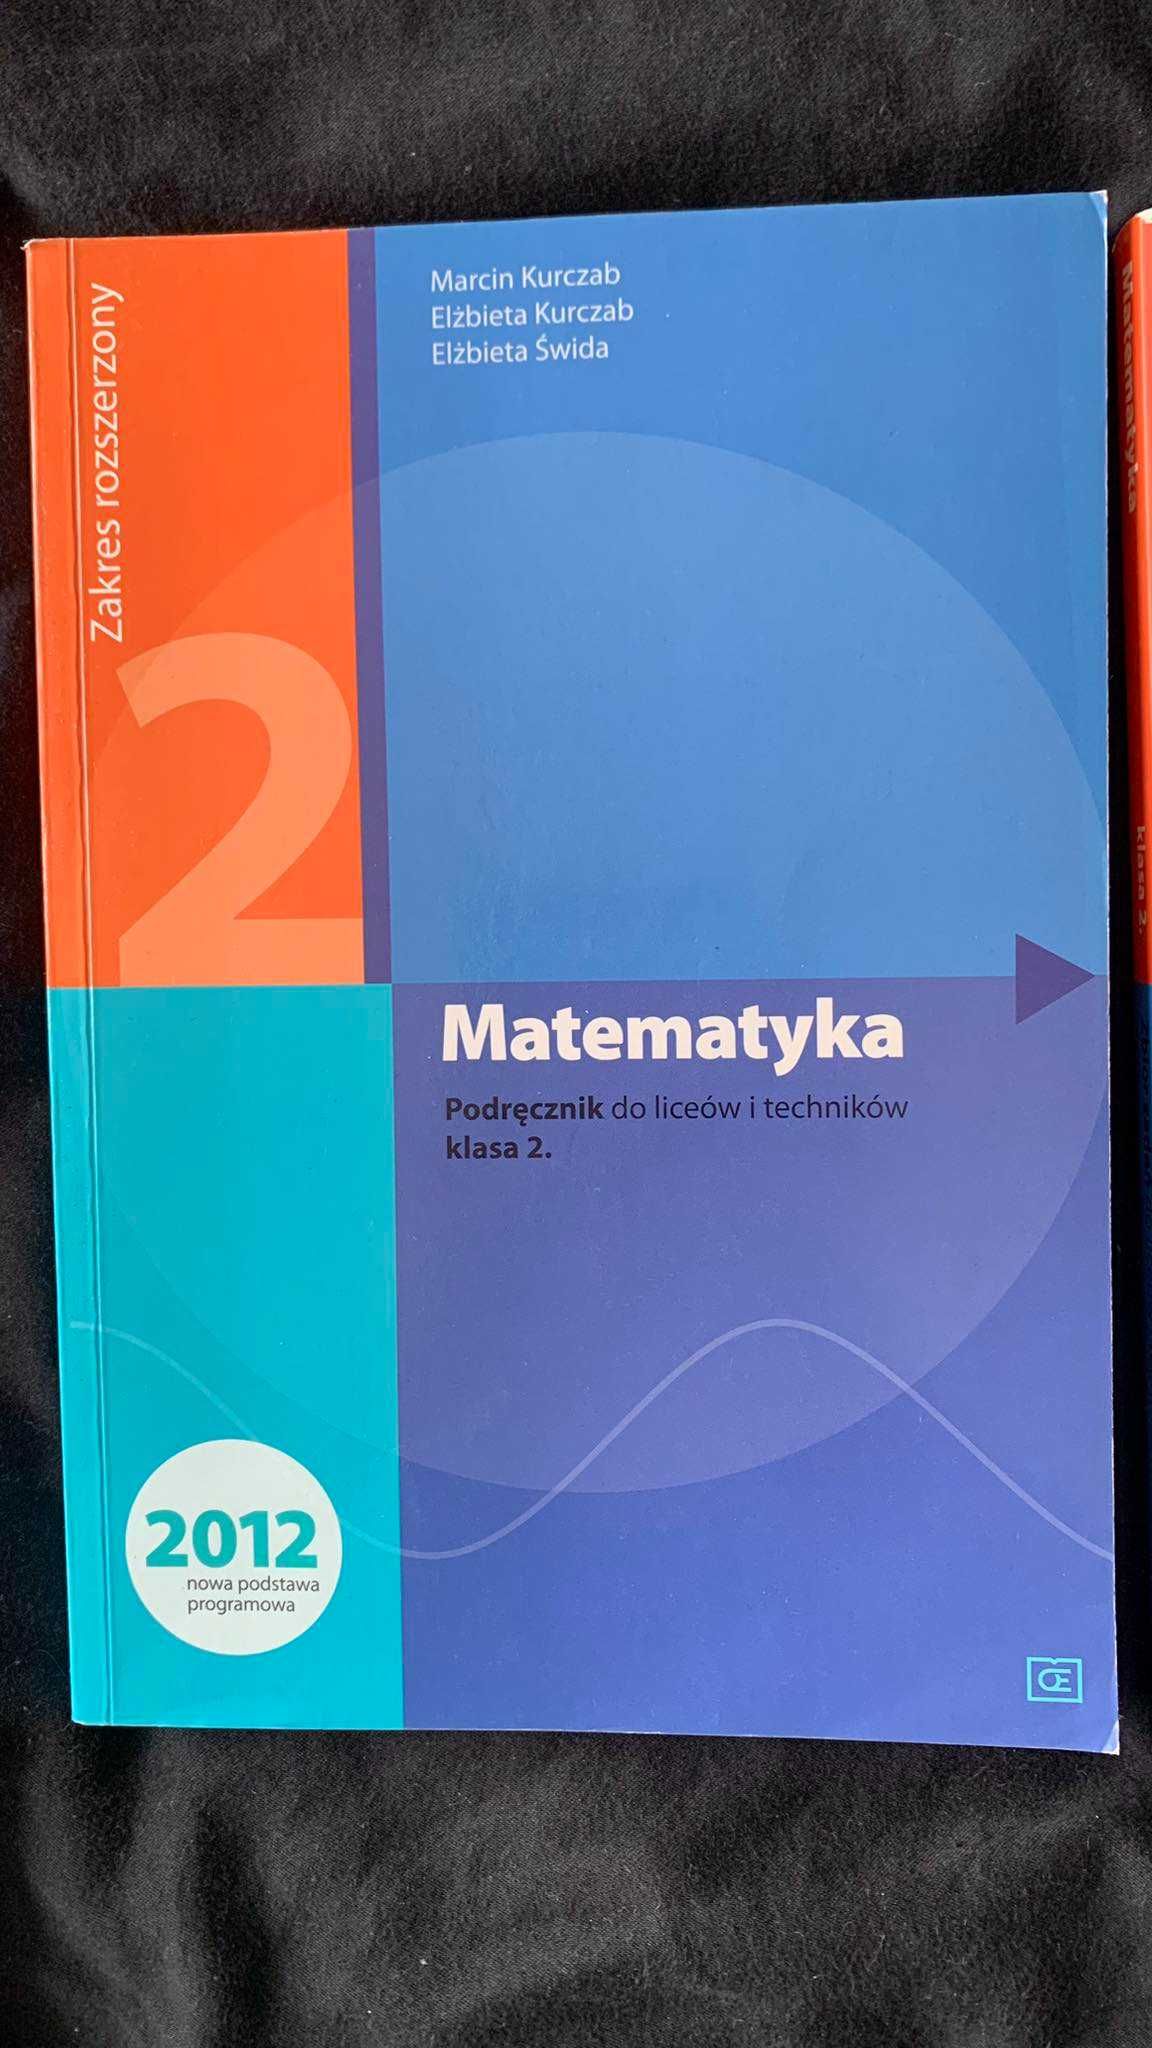 Matematyka 2 Elżbieta Kurczab, Elżbieta Świda, Marcin Kurczab